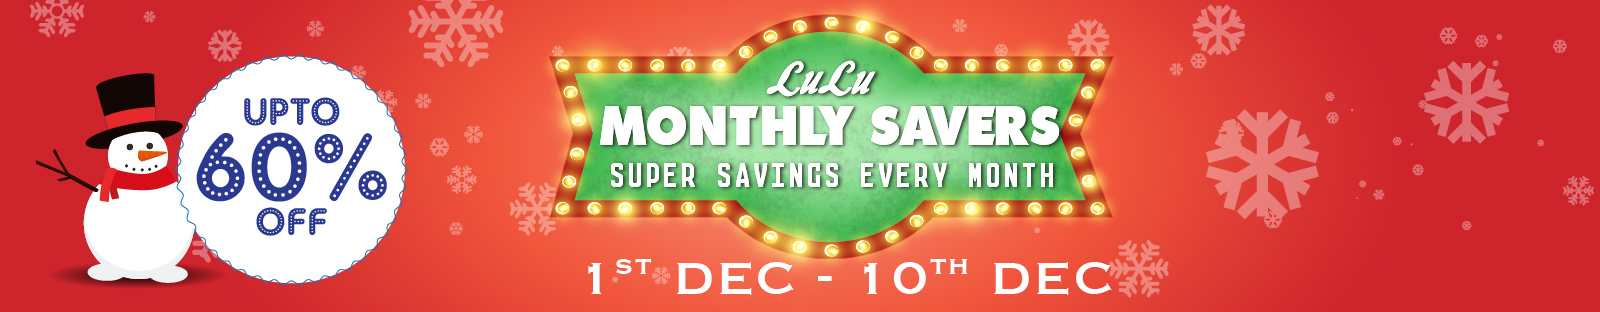 Monthly Savers_Christmas-01.jpg